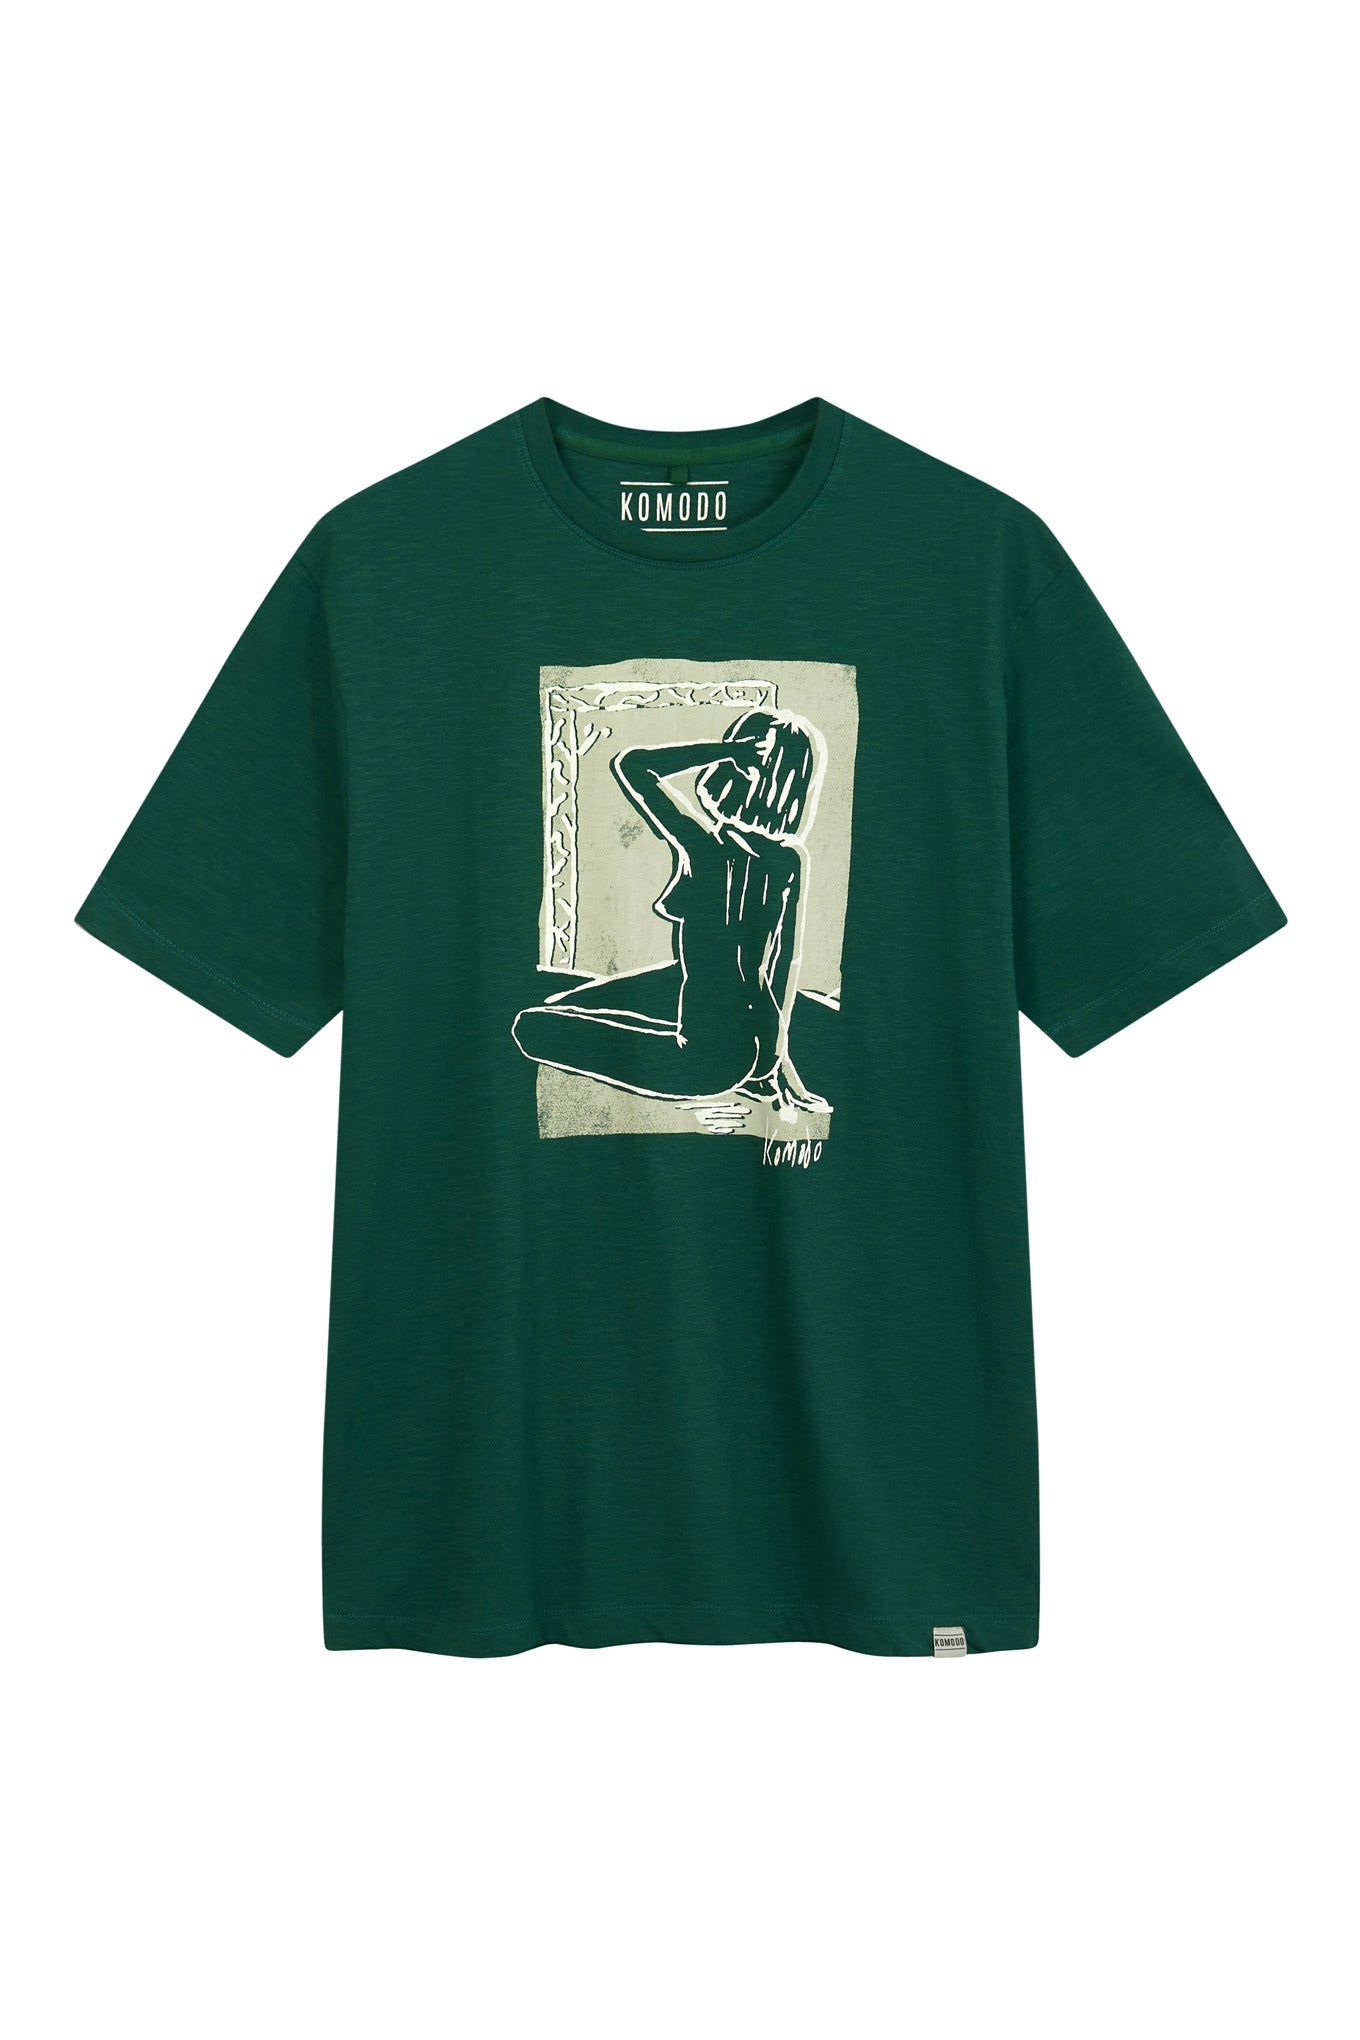 Green T-shirt CHEEKY made of organic cotton from Komodo